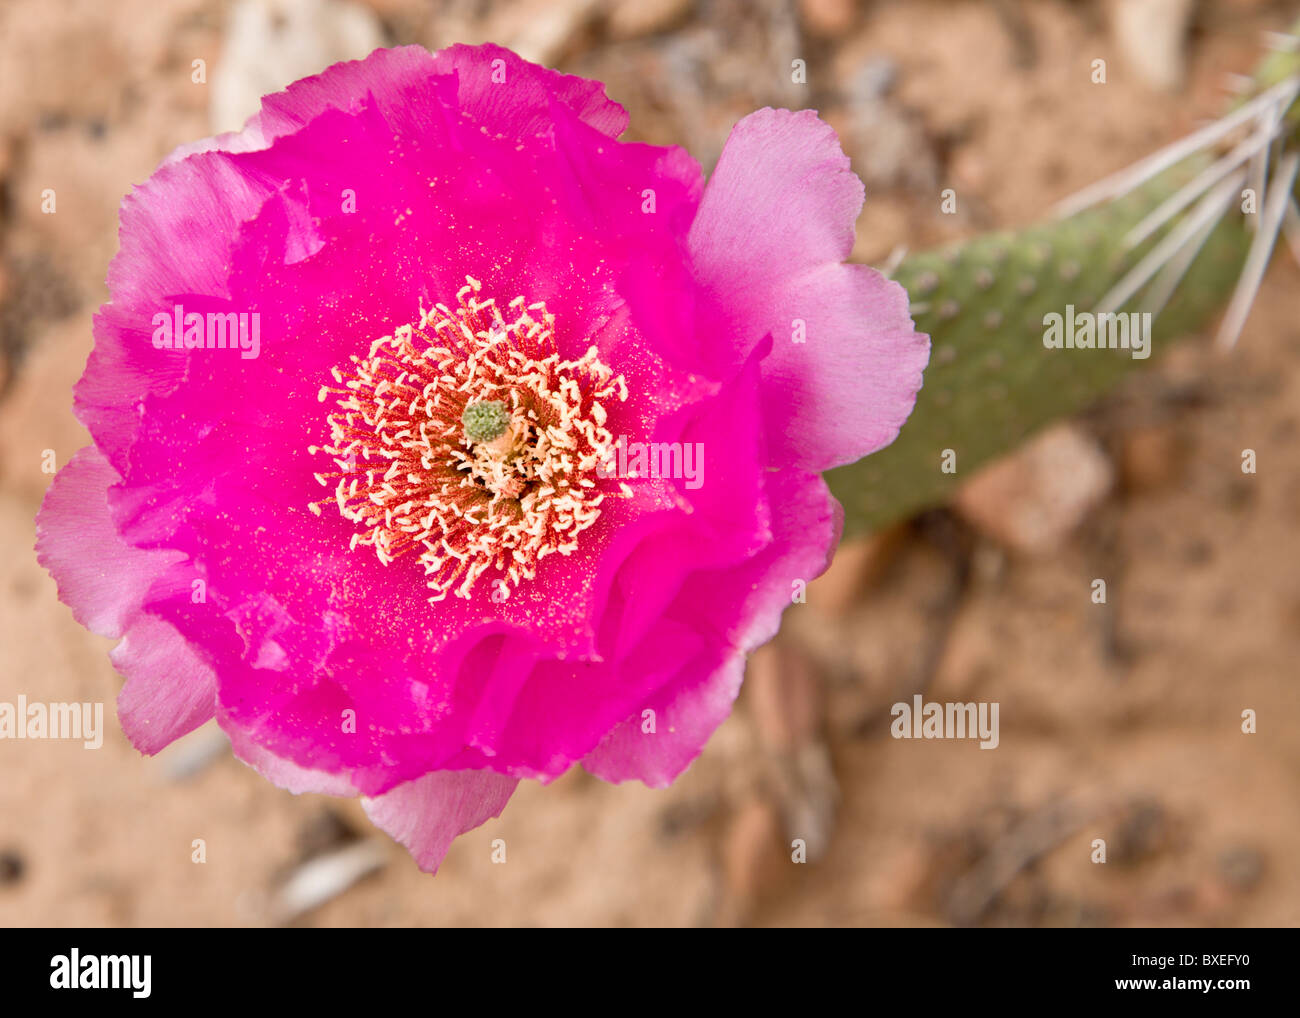 Pink cactus flower Stock Photo